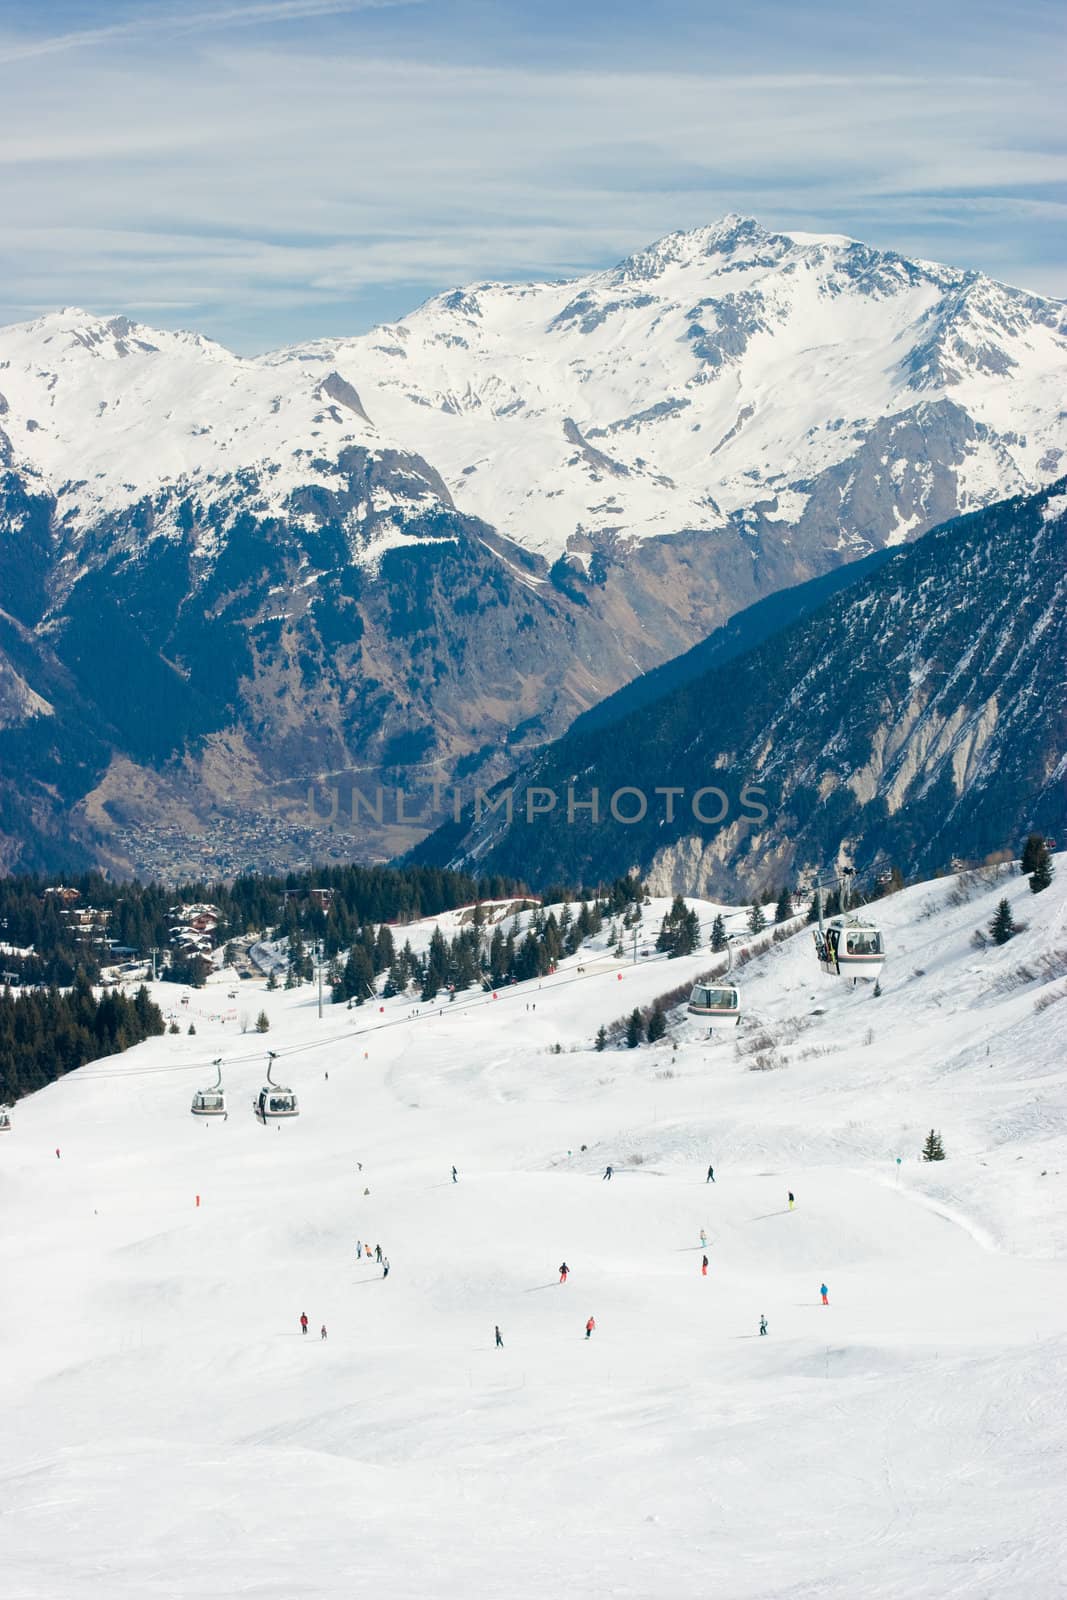 Ski resort valley by naumoid